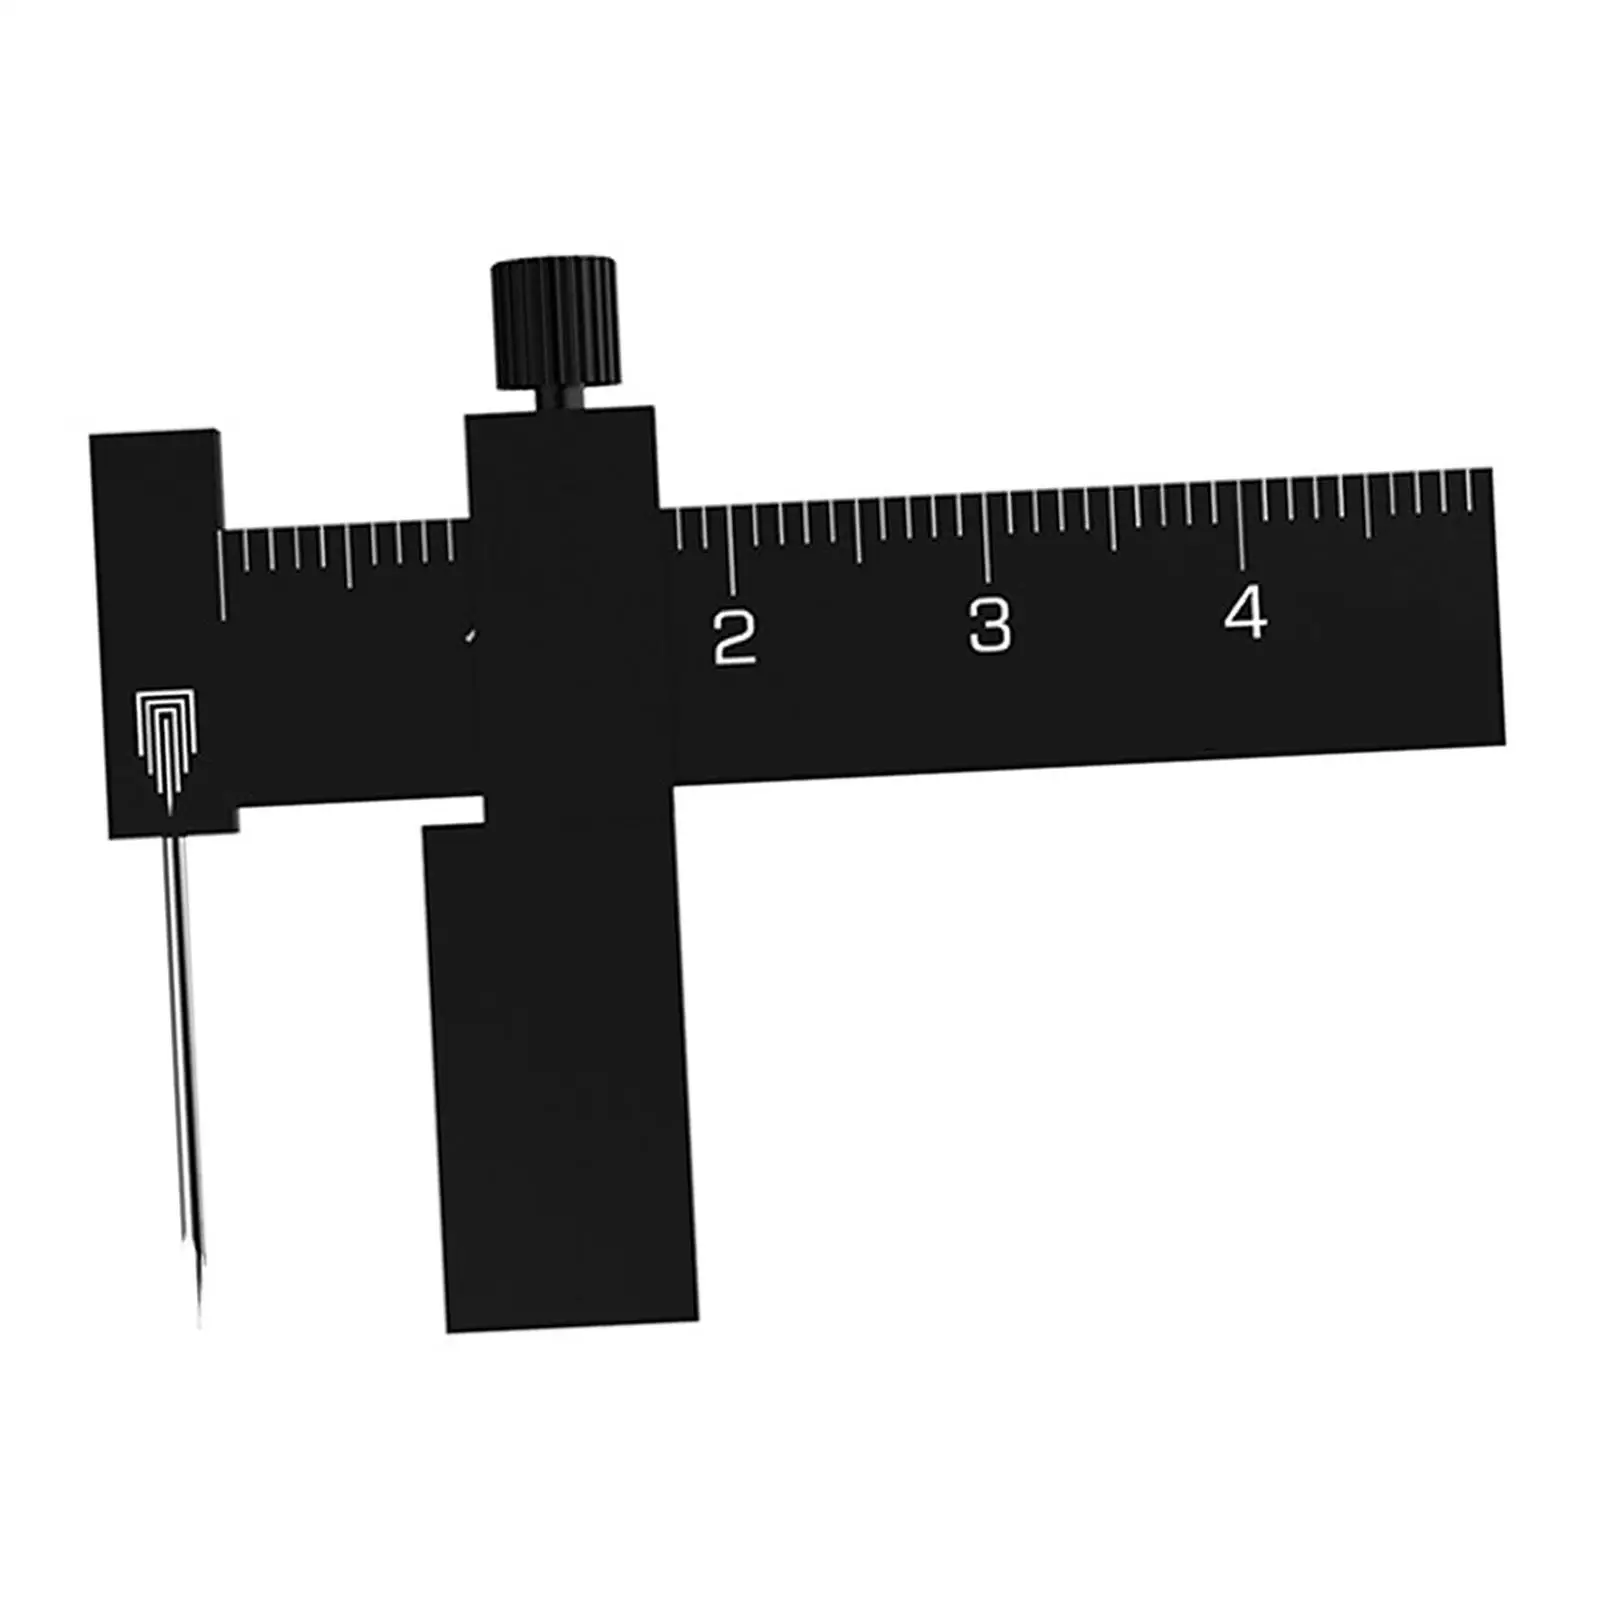 Equidistant Parallel Scriber Engraving Ruler T14A02 DIY Sliding Adjustable Measuring Metal Carving Line Tool for Engineering